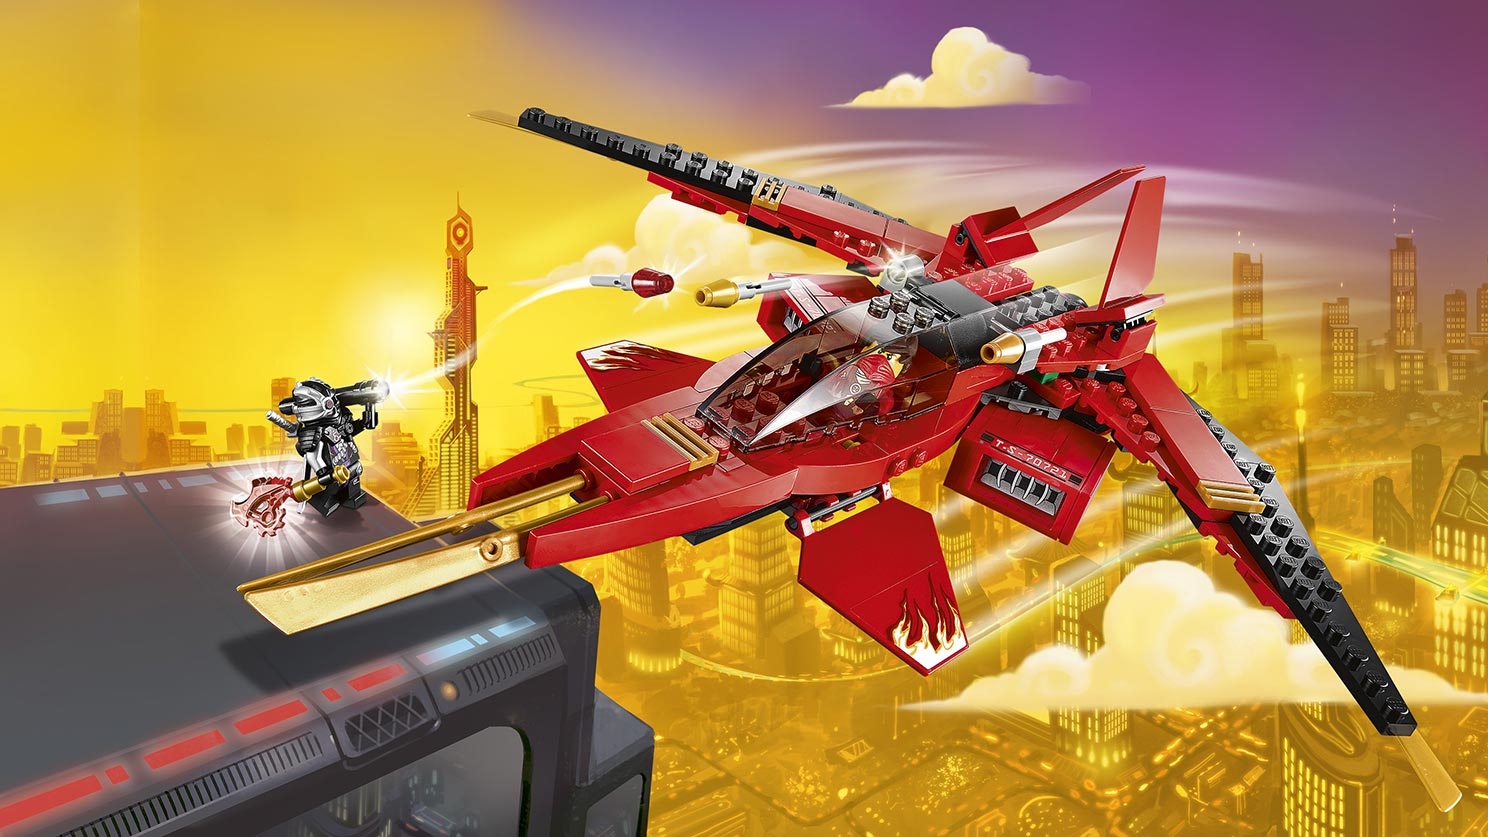 Gogoko】Techno Blades LEGO Ninjago Season 3 